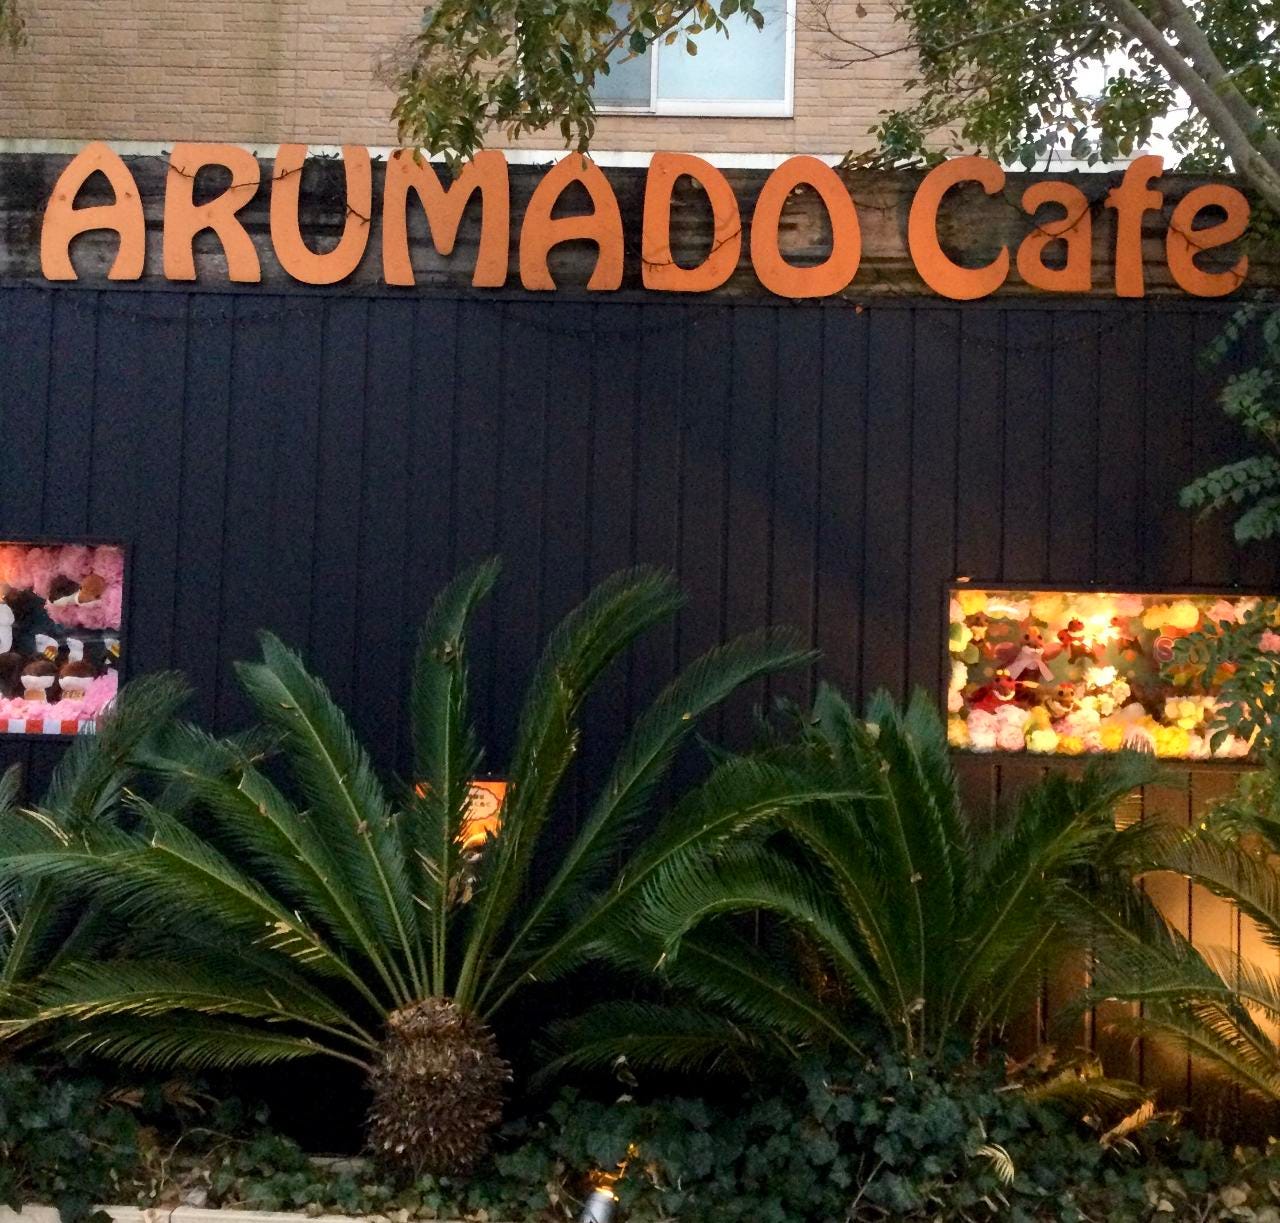 ARUMADO Cafe